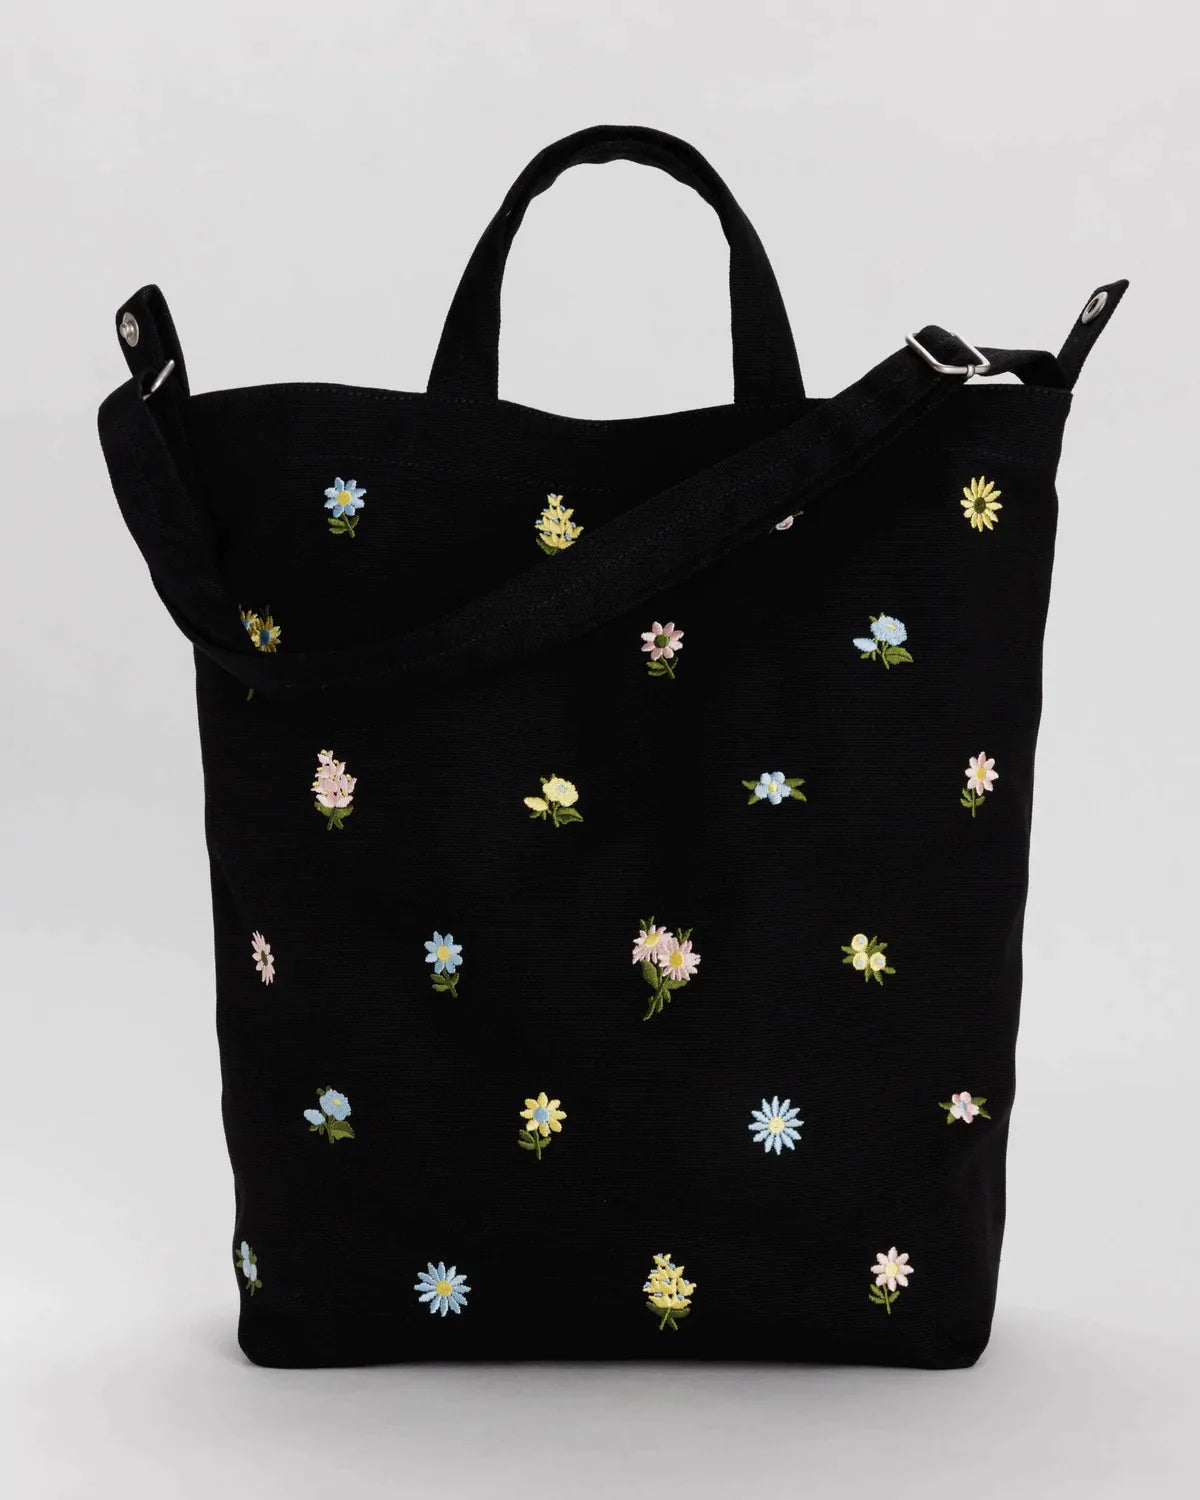 Crochet Crossbody Bags, Amigurumi Crossbody Bags, Crochet Duck Bag,  Handmade Duck Bag, Gift for Her, Gift for Girls, Handmade Bags - Etsy |  Crochet projects, Crochet, Crochet bag